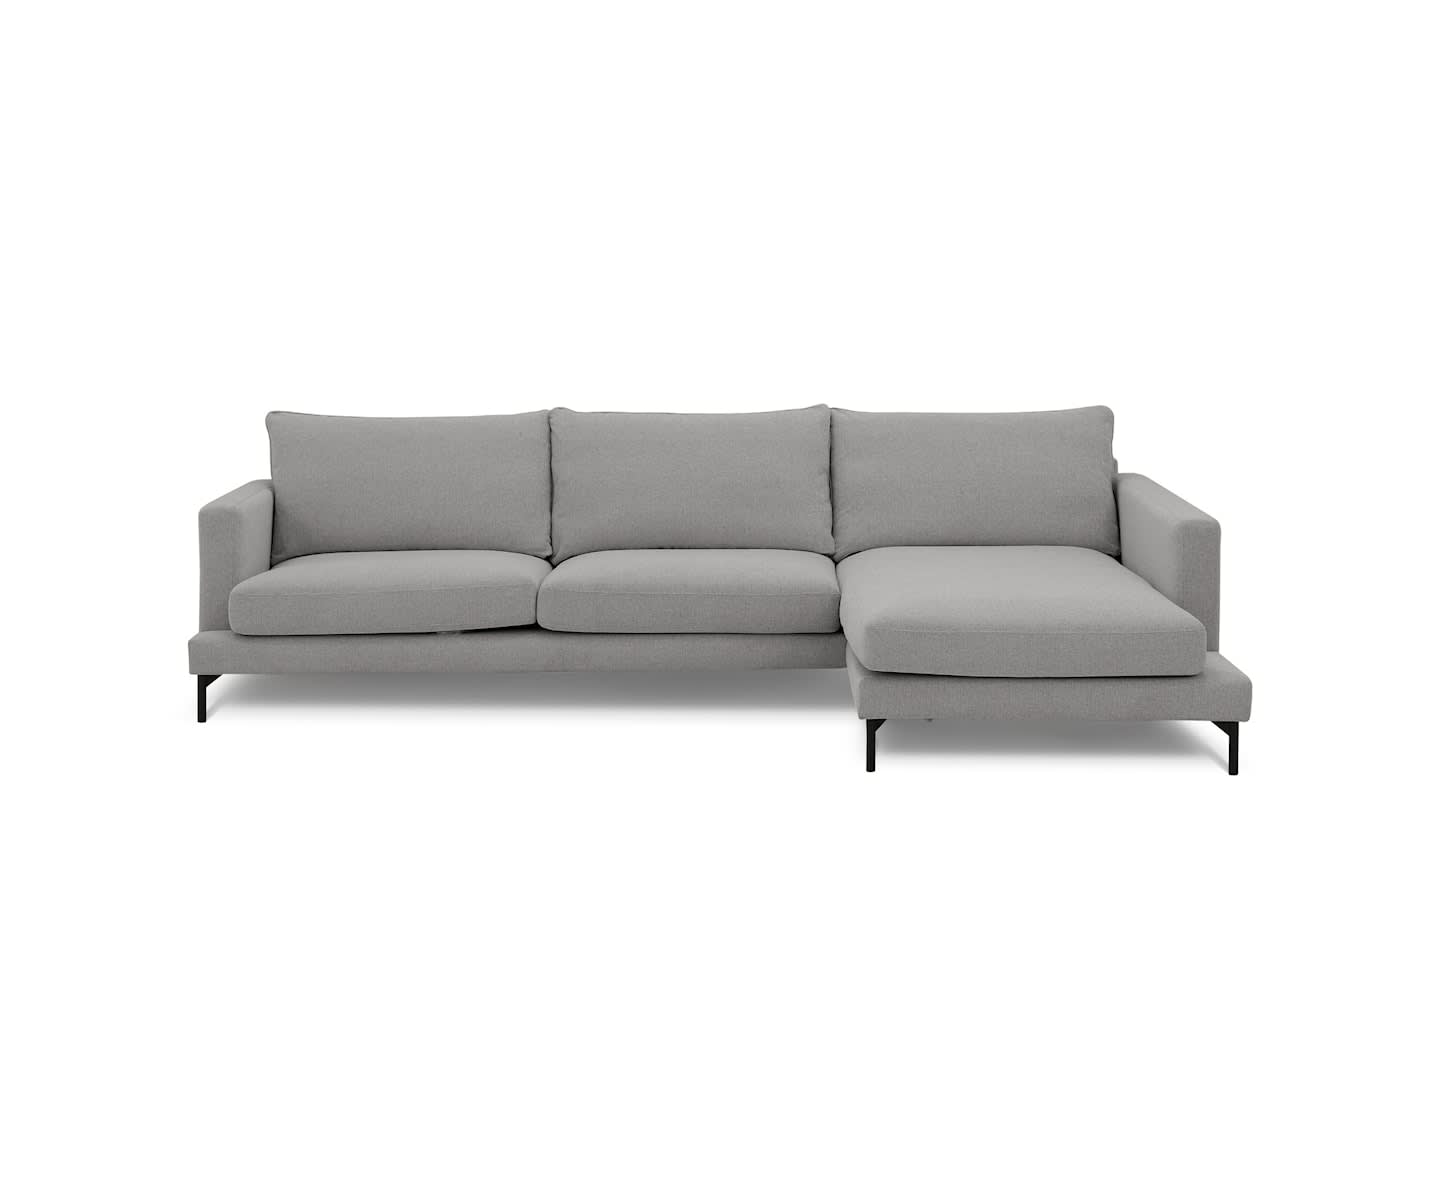 Sleepo Olivia 4-Sitzer Chaiselongue Sofa Links Silber 297cm